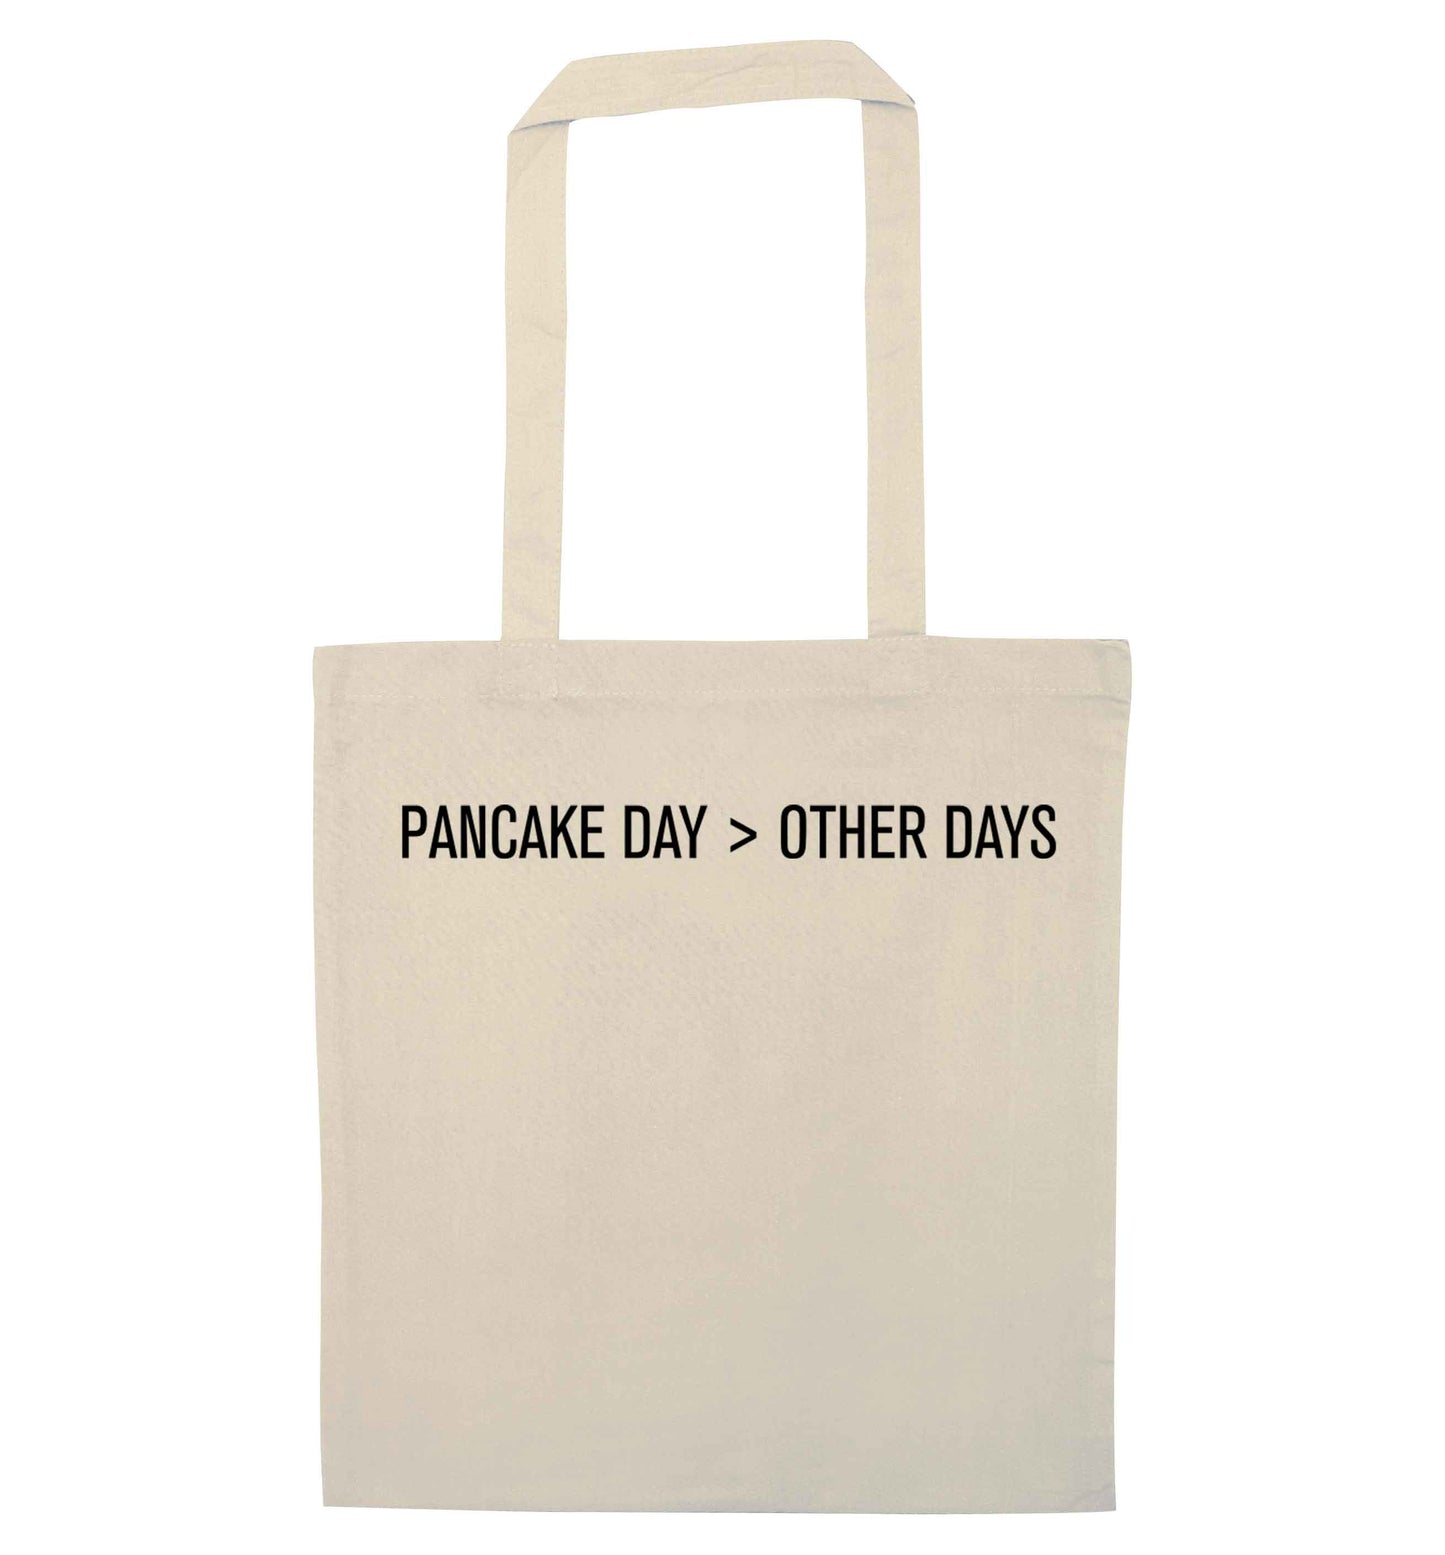 Pancake day > other days natural tote bag